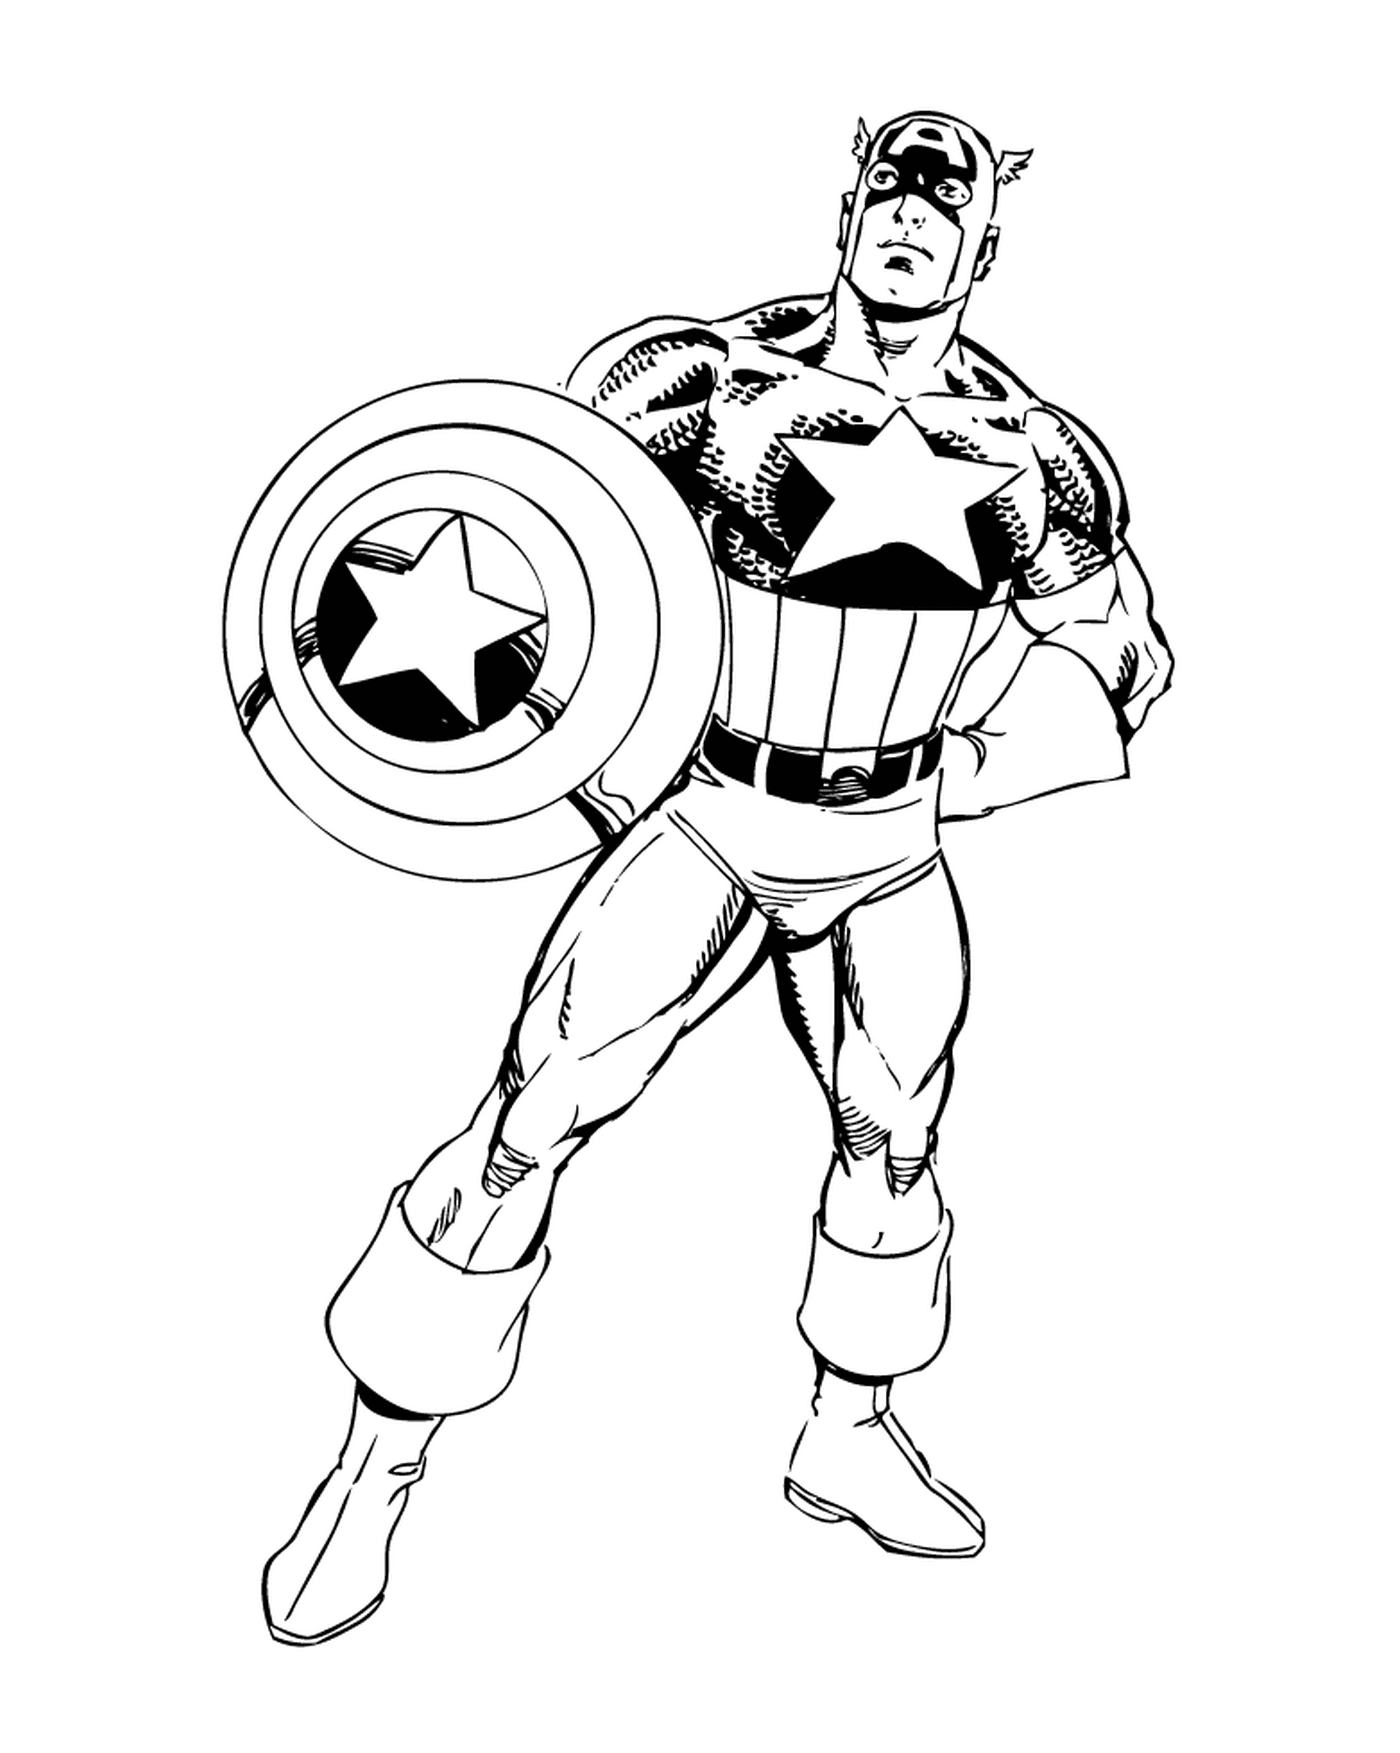  An authentic Captain America 